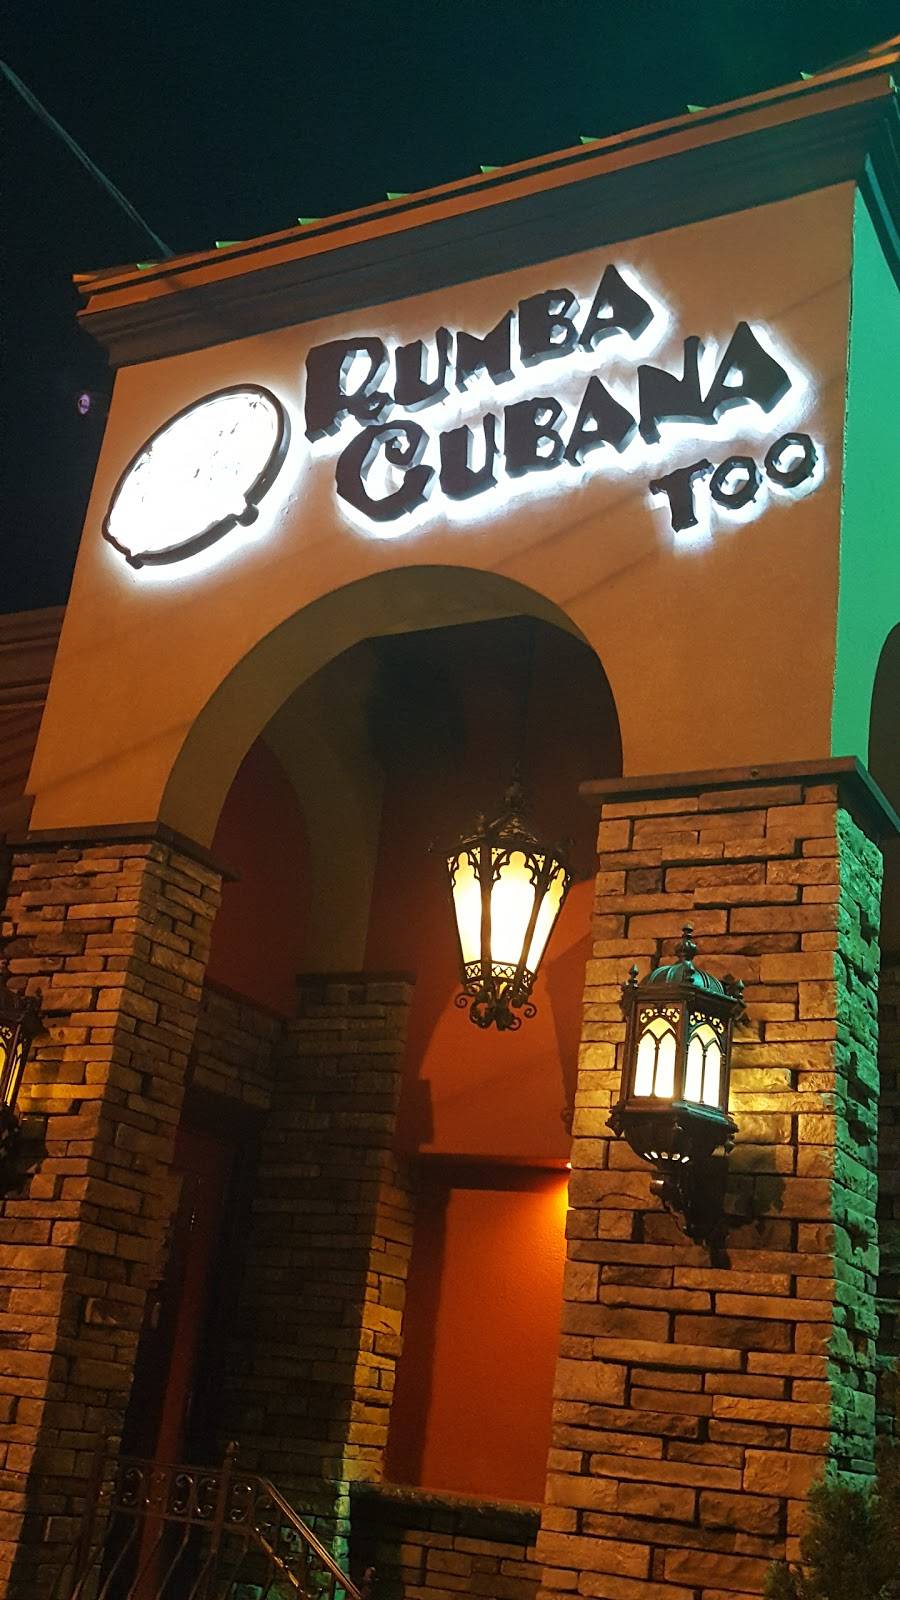 Rumba Cubana | restaurant | 1807 45th St, North Bergen, NJ 07047, USA | 2015539100 OR +1 201-553-9100